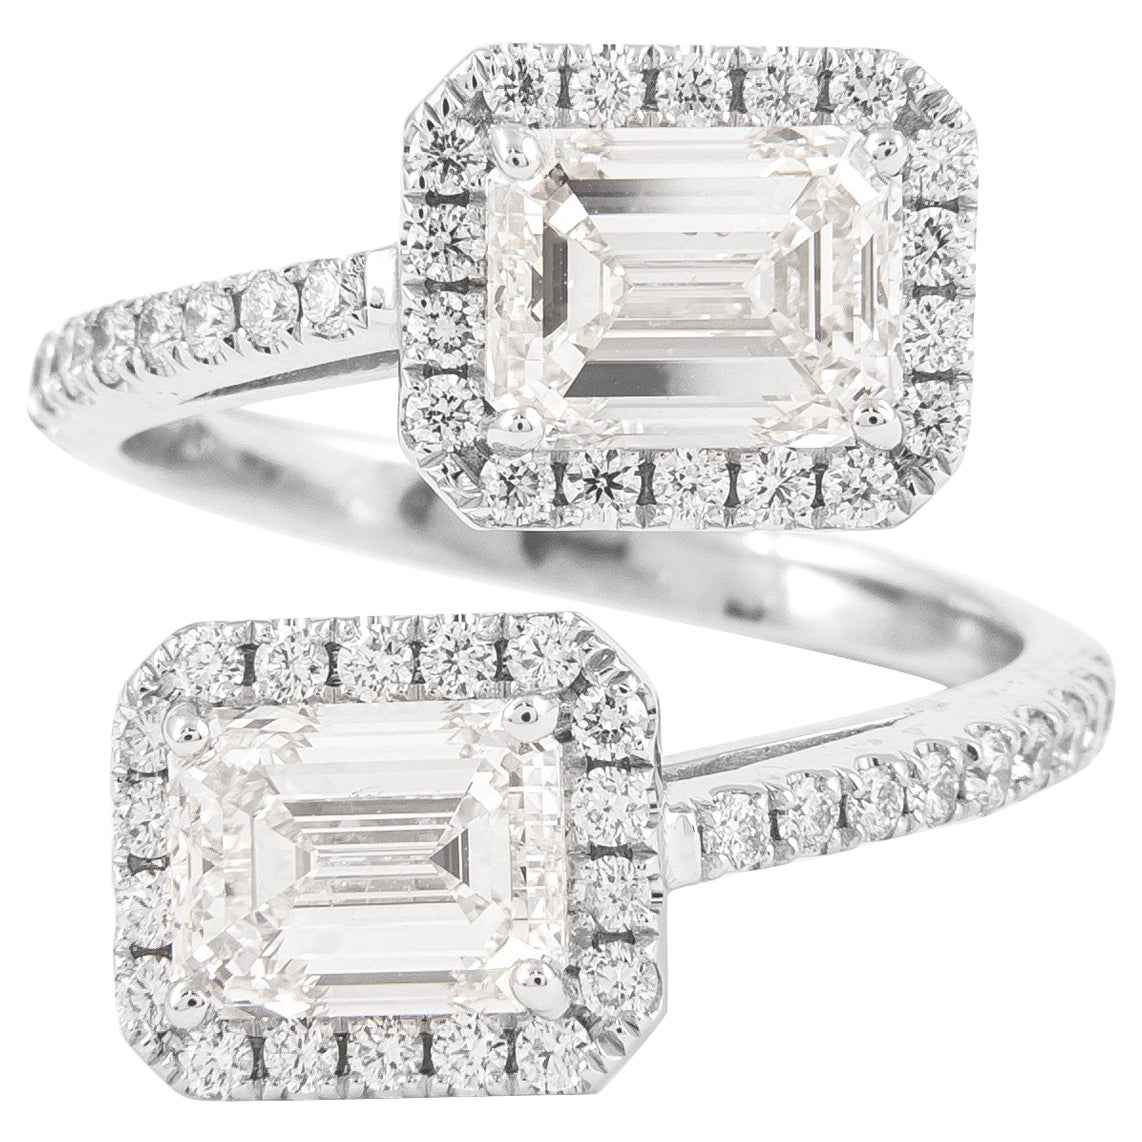 Alexander GIA zertifiziert 3,89 Karat Toi et Moi Smaragdschliff Diamanten Pave Bypass-Ring im Angebot